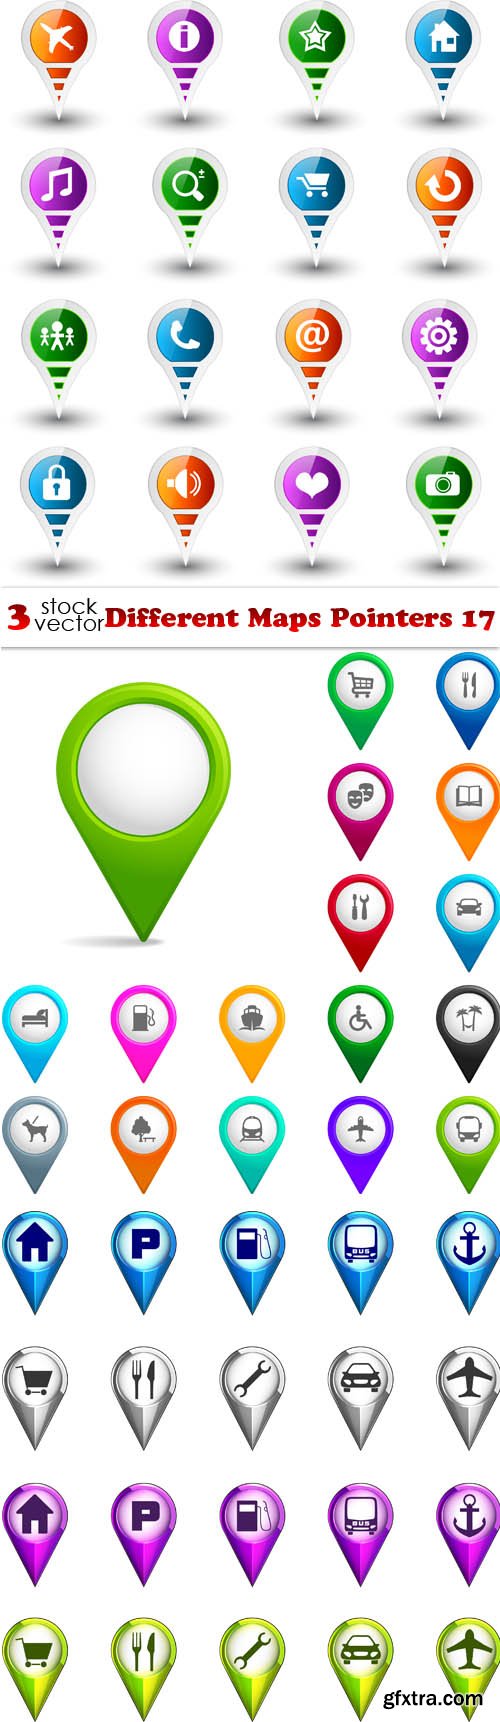 Vectors - Different Maps Pointers 17